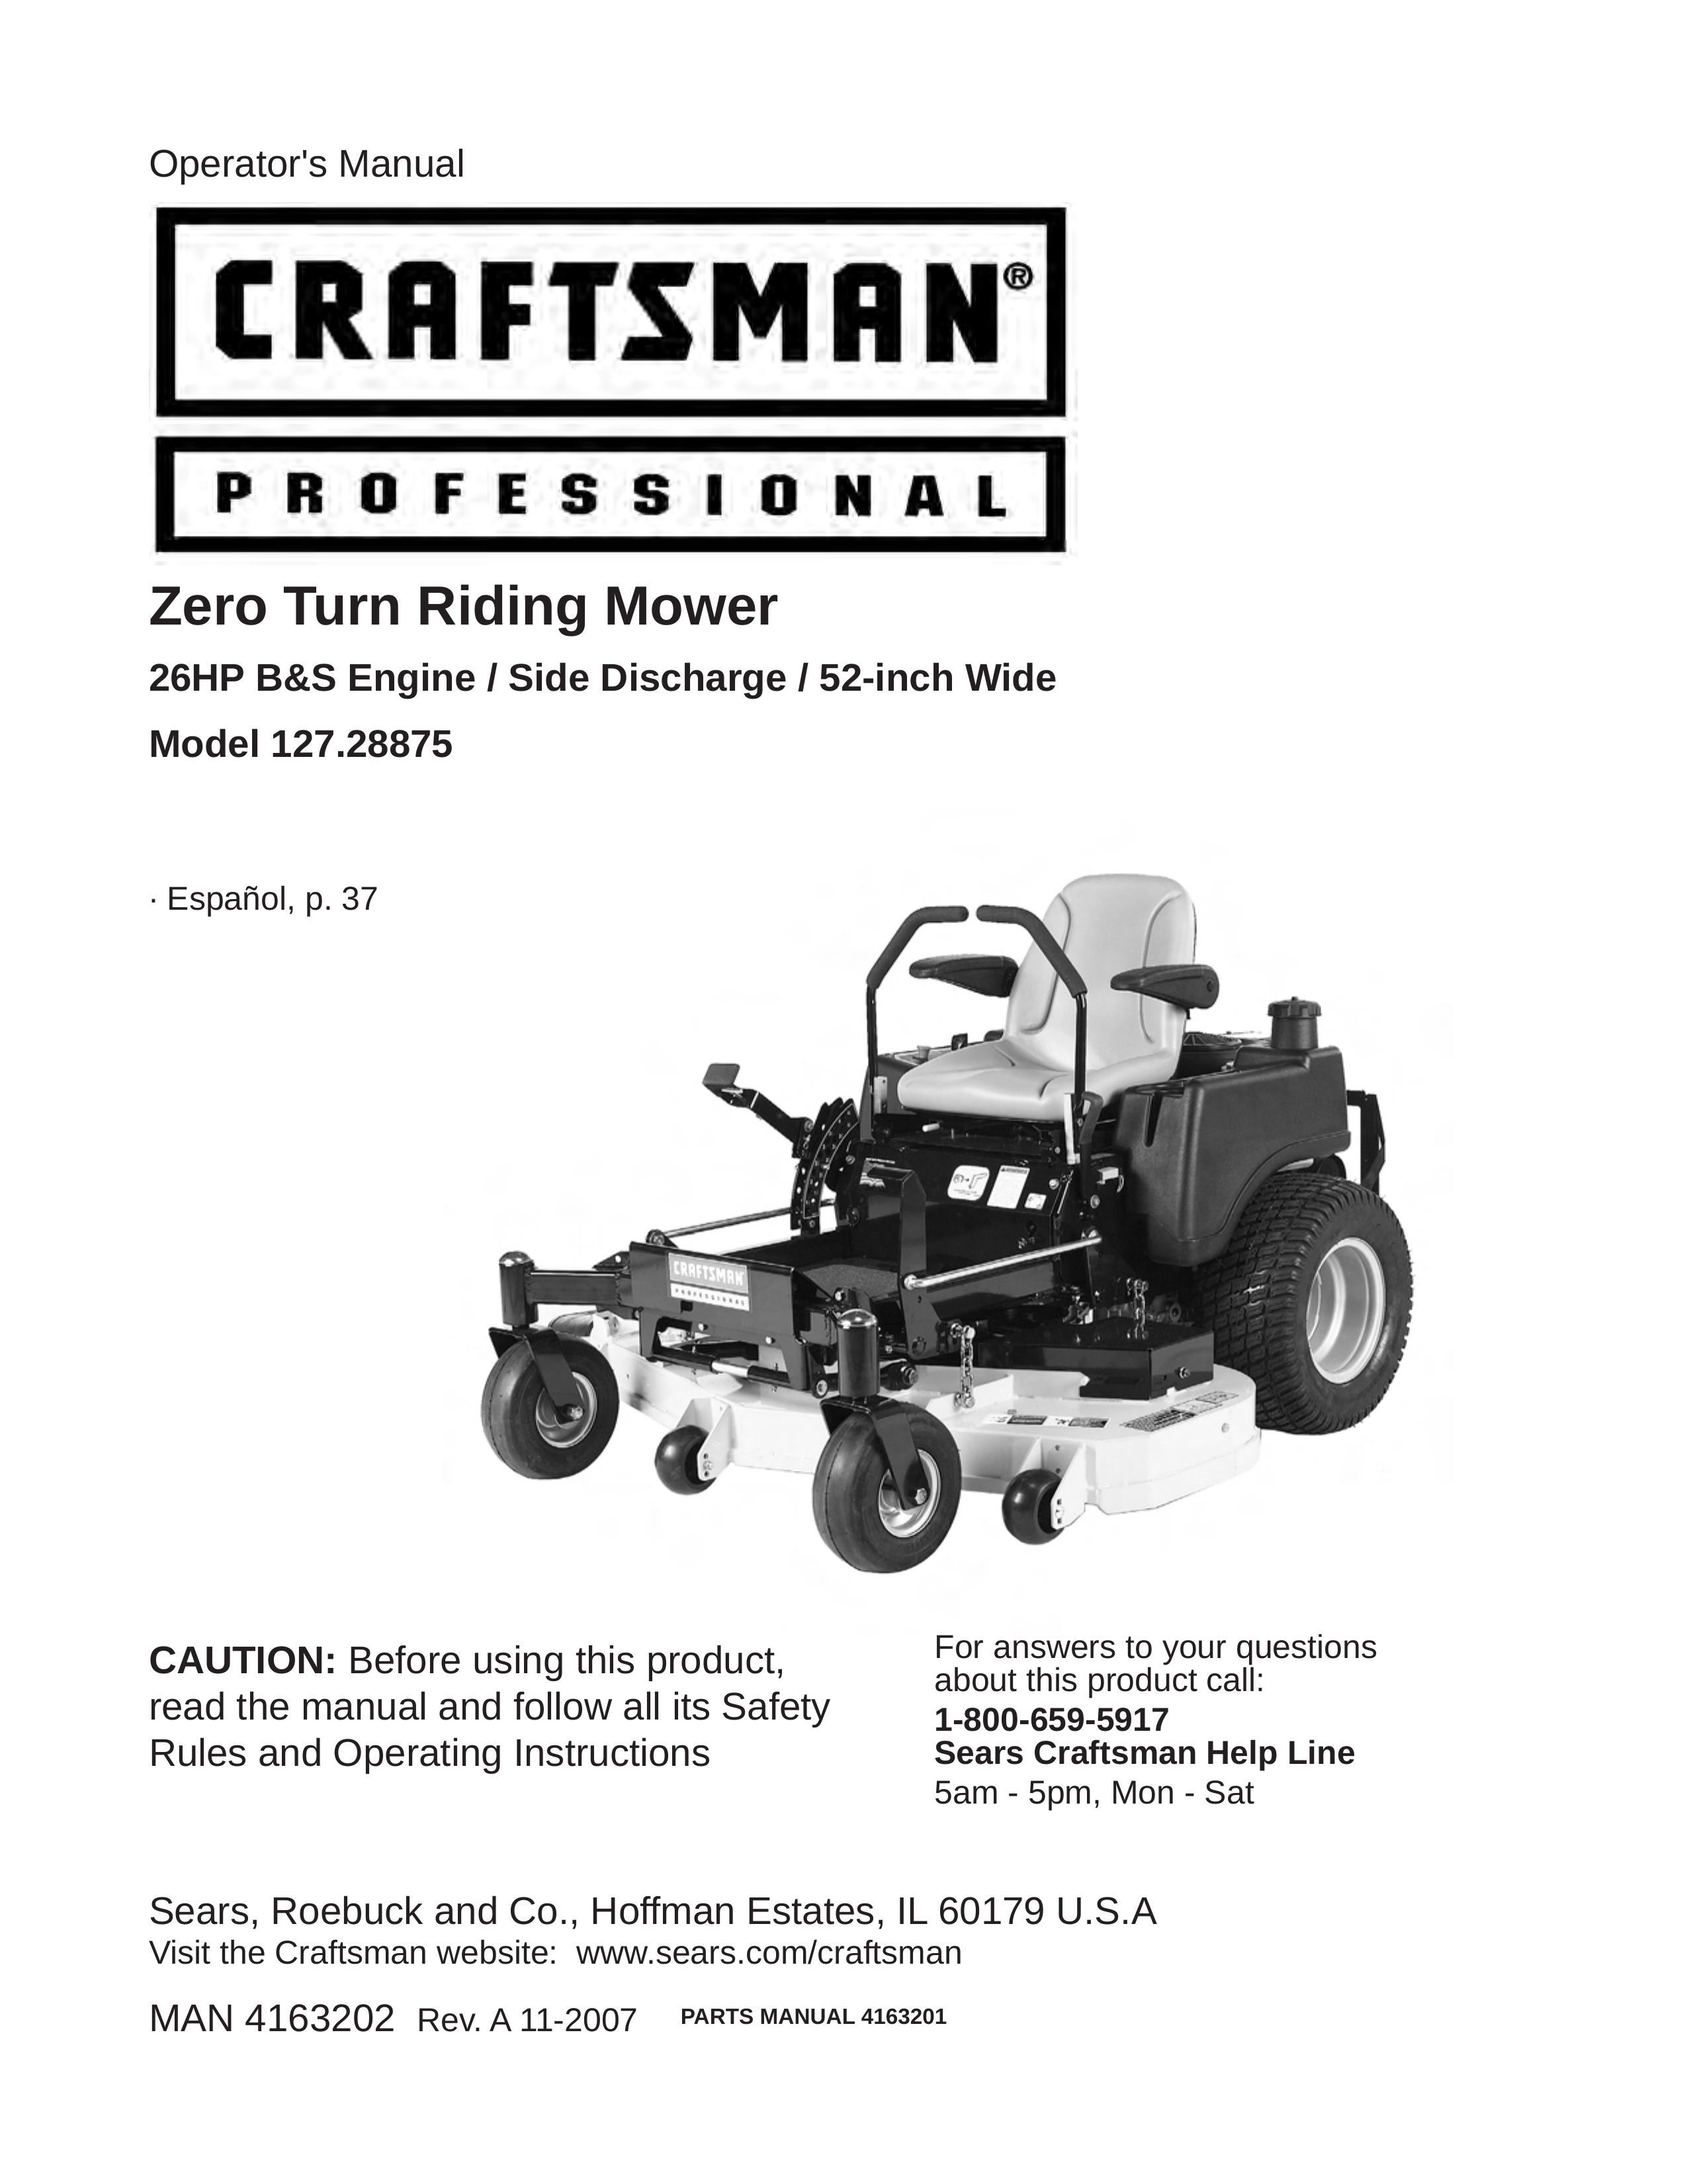 Craftsman 127.28875 Lawn Mower User Manual